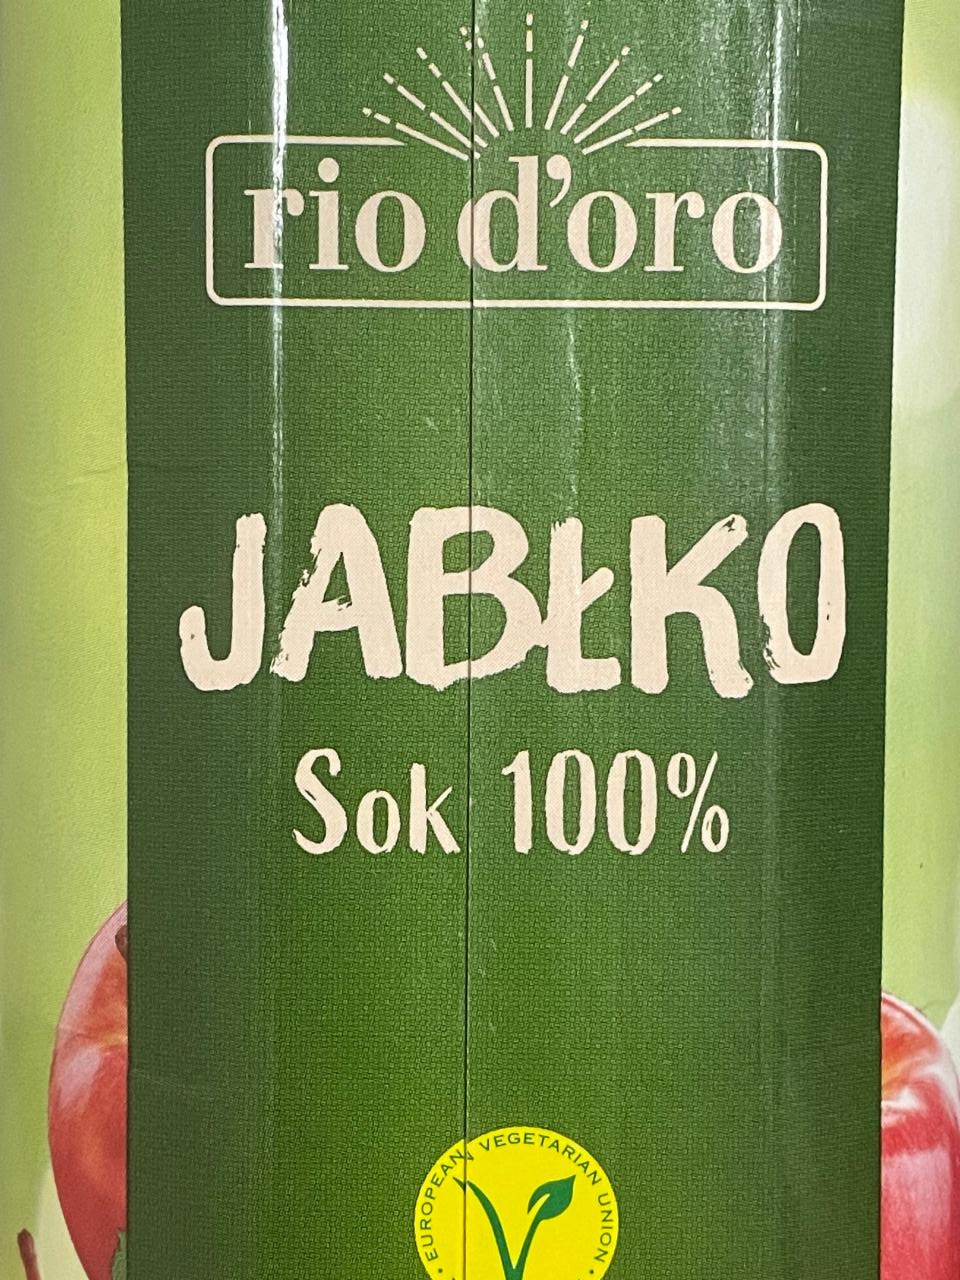 Фото - яблочный сок Rio d’oro